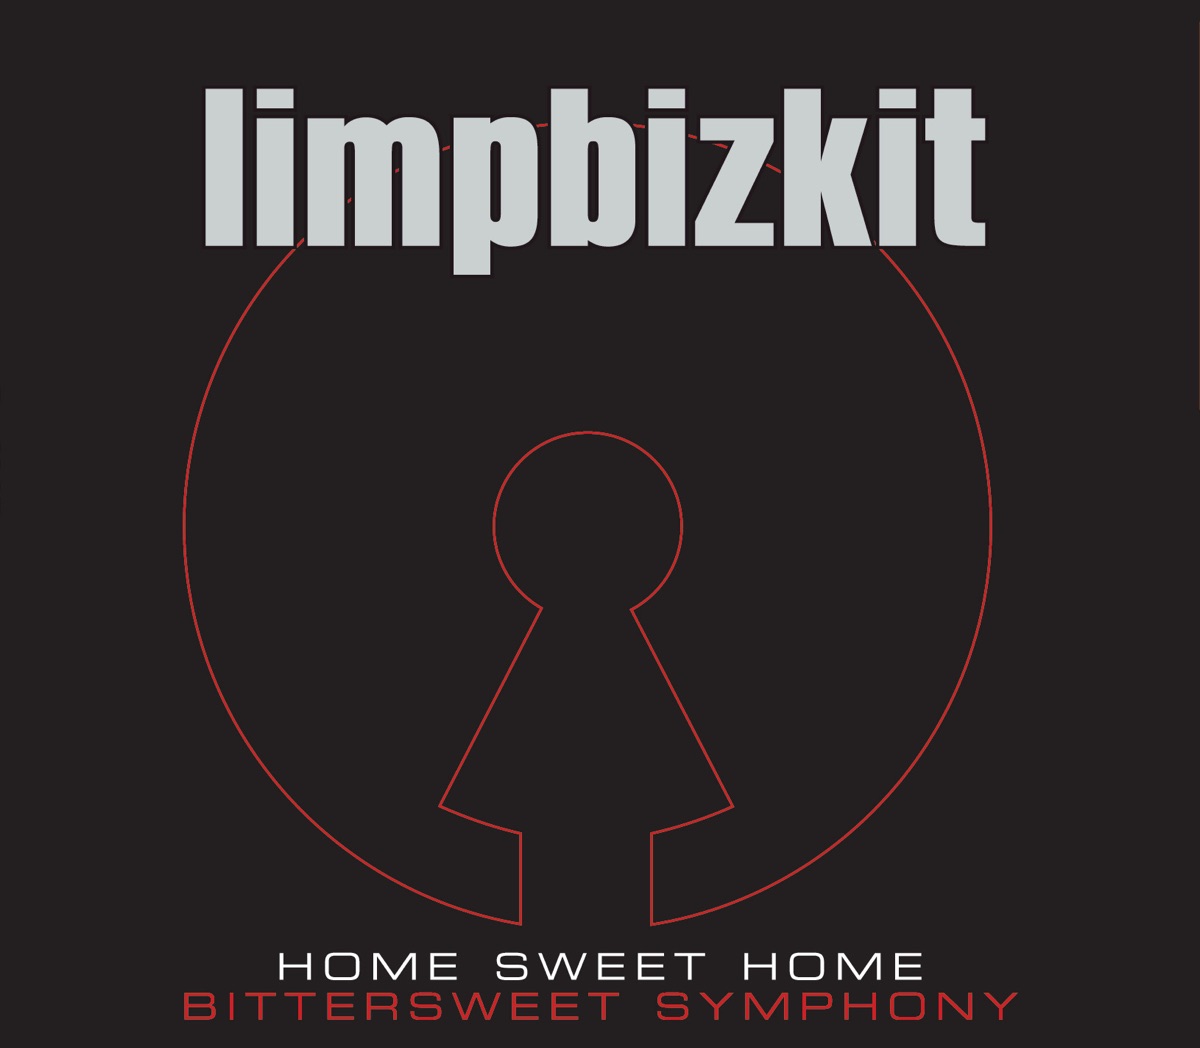 Behind Blue Eyes - Single - Album by Limp Bizkit - Apple Music